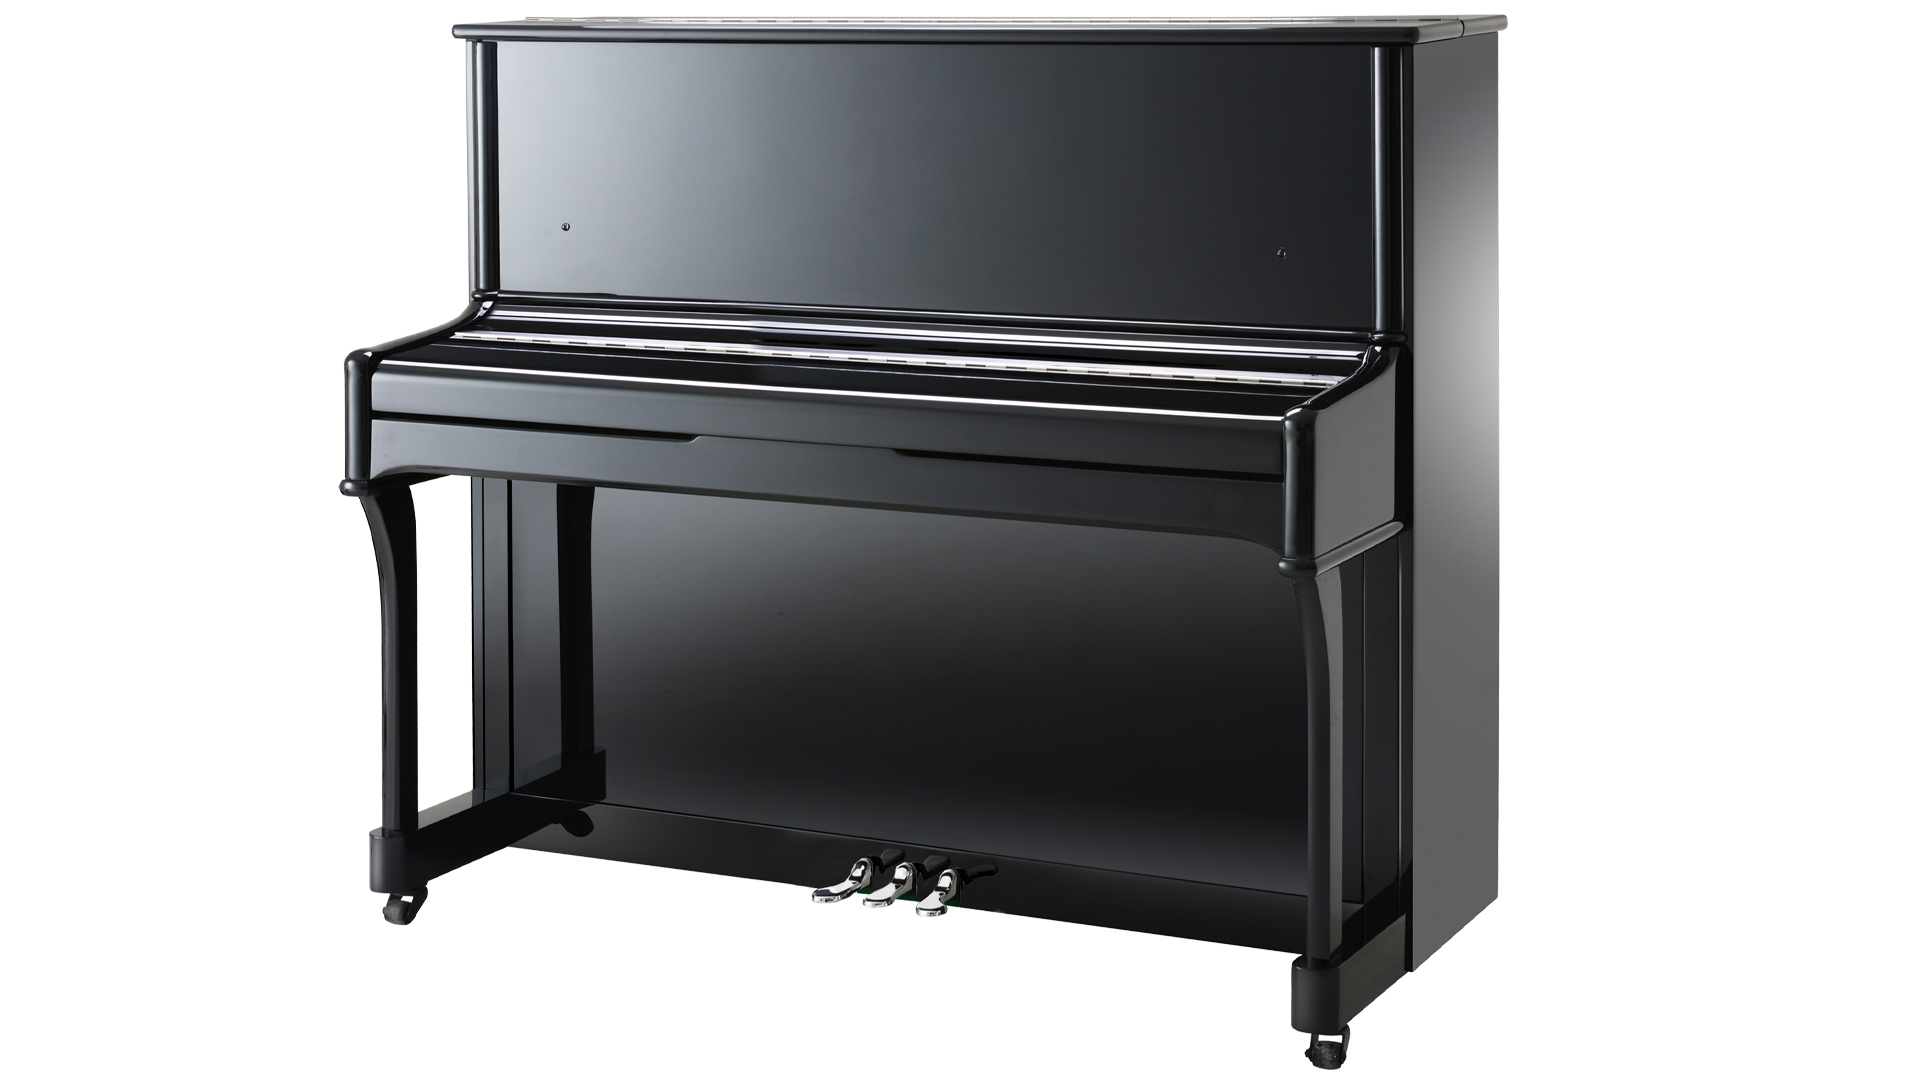 Schumann piano Model K1